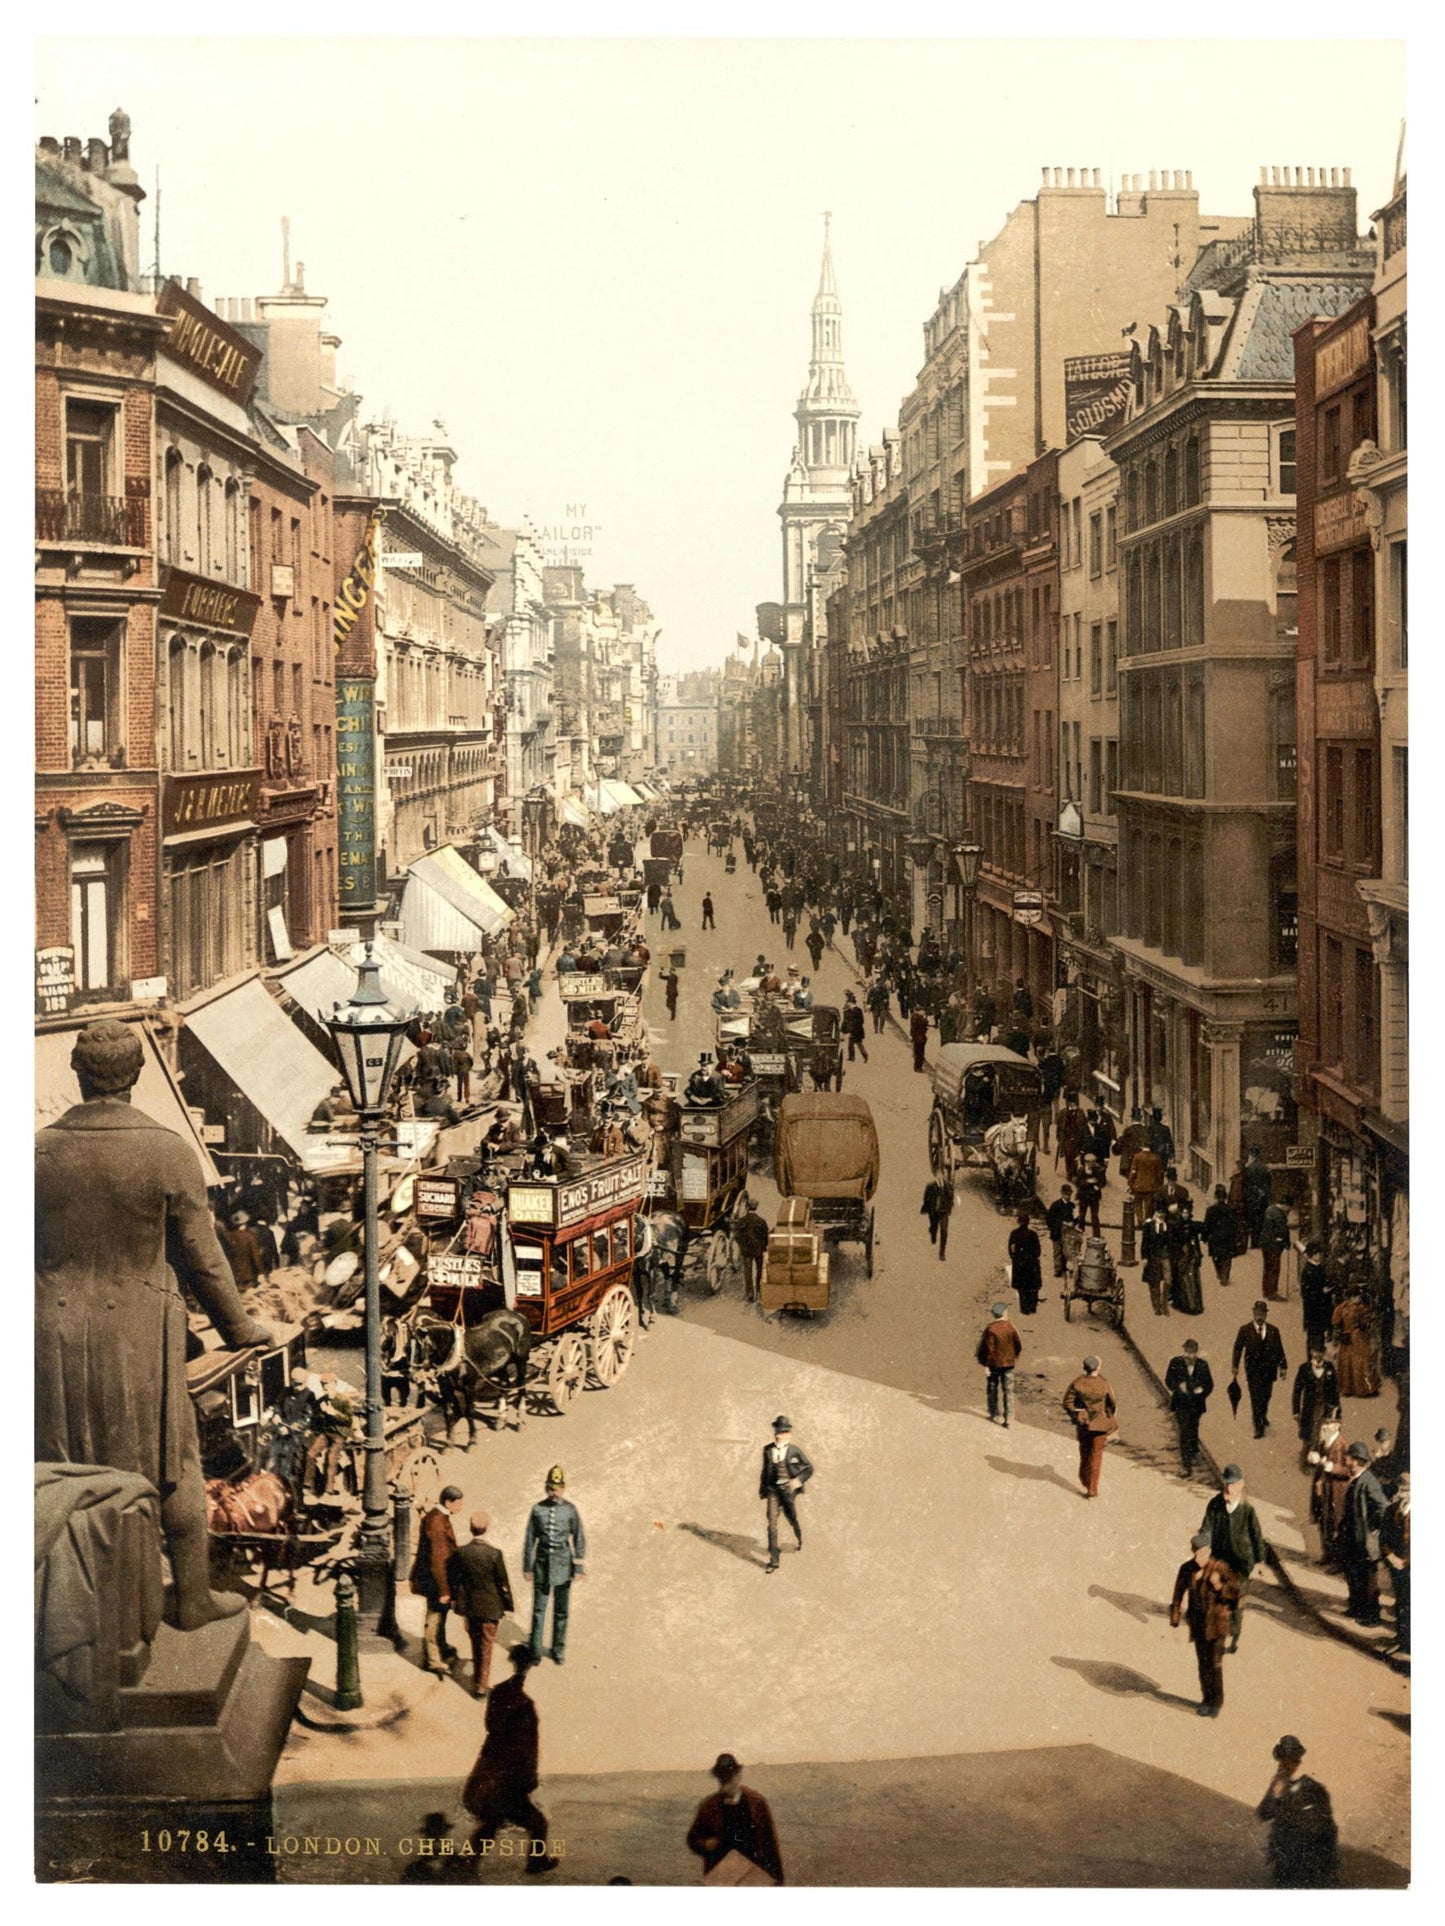 Historische Ansicht London Cheapside um 1895